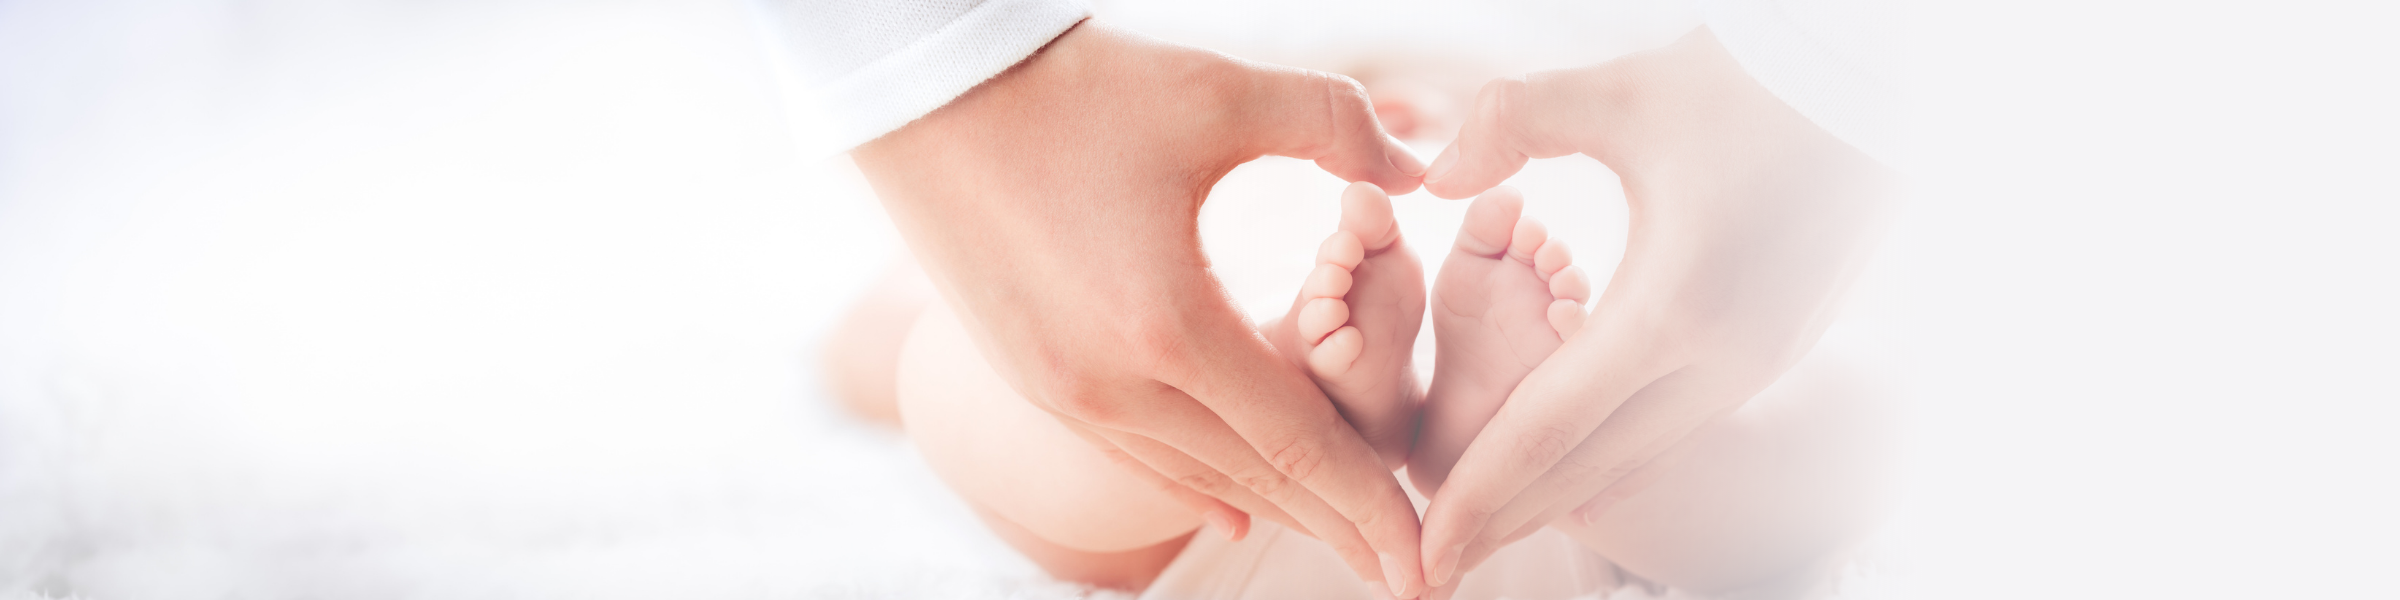 heart hand shape over baby feet